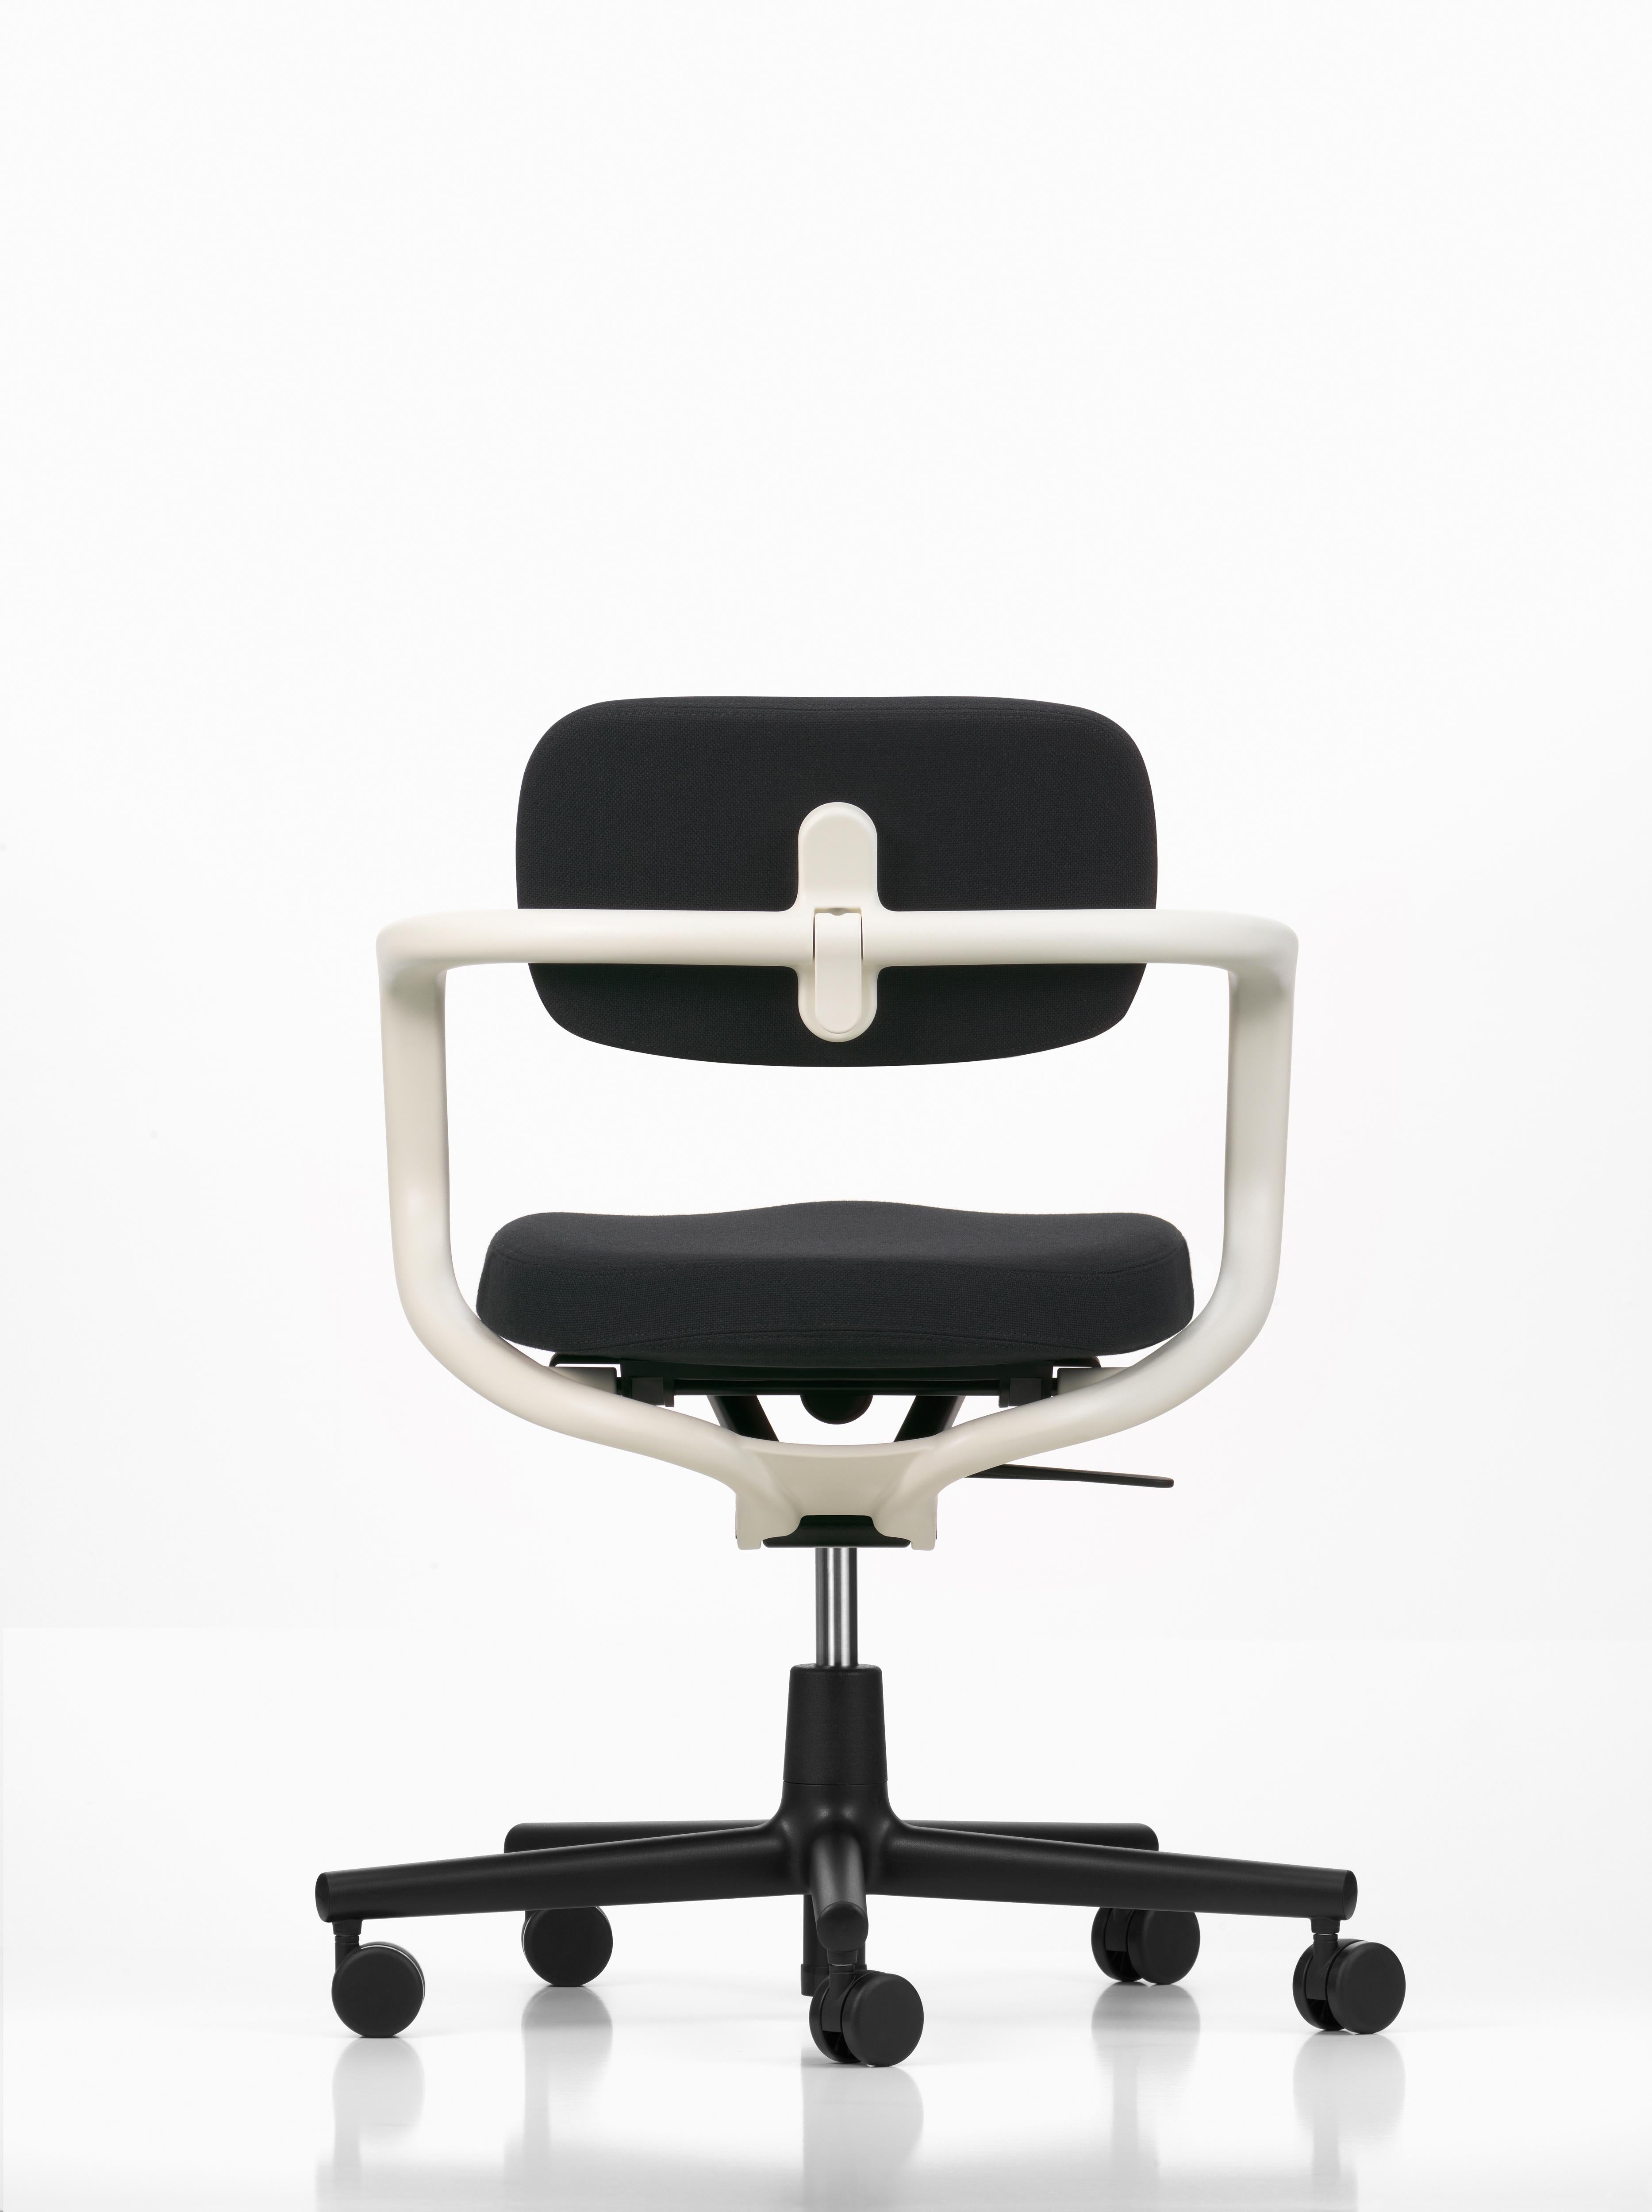 Swiss Vitra Allstar Chair in Nero Hopsak with White Armrest by Konstantin Grcic For Sale